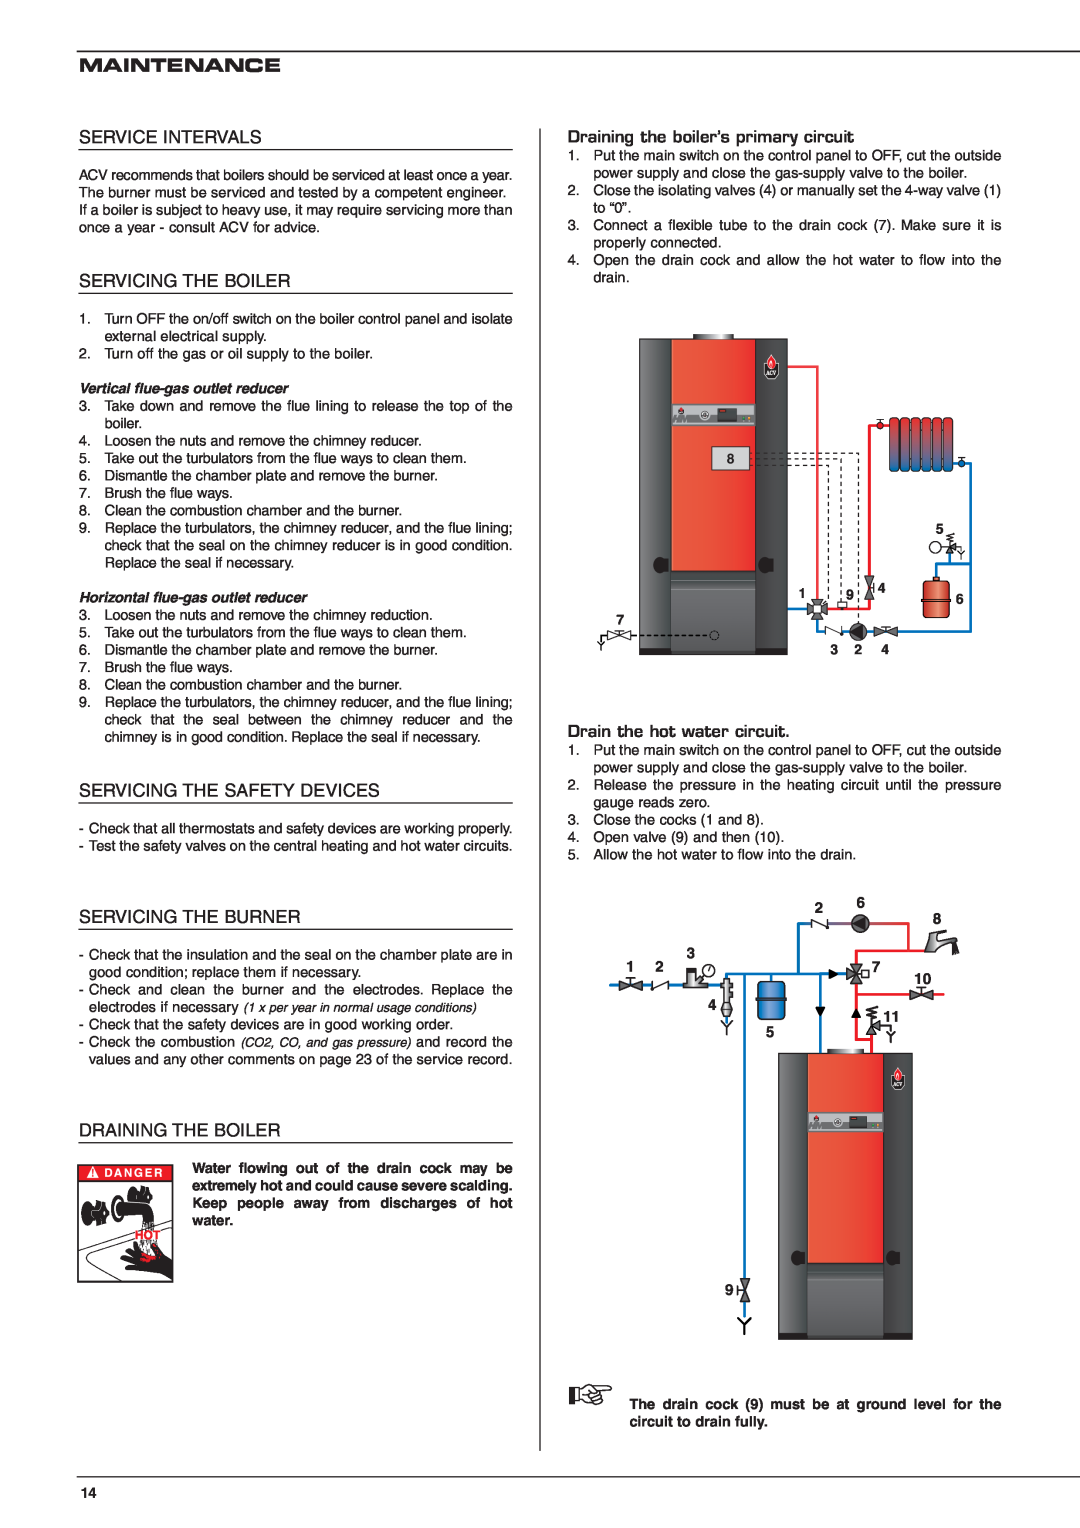 Heatmaster 201 manual Maintenance, Draining the boiler’s primary circuit, Drain the hot water circuit 